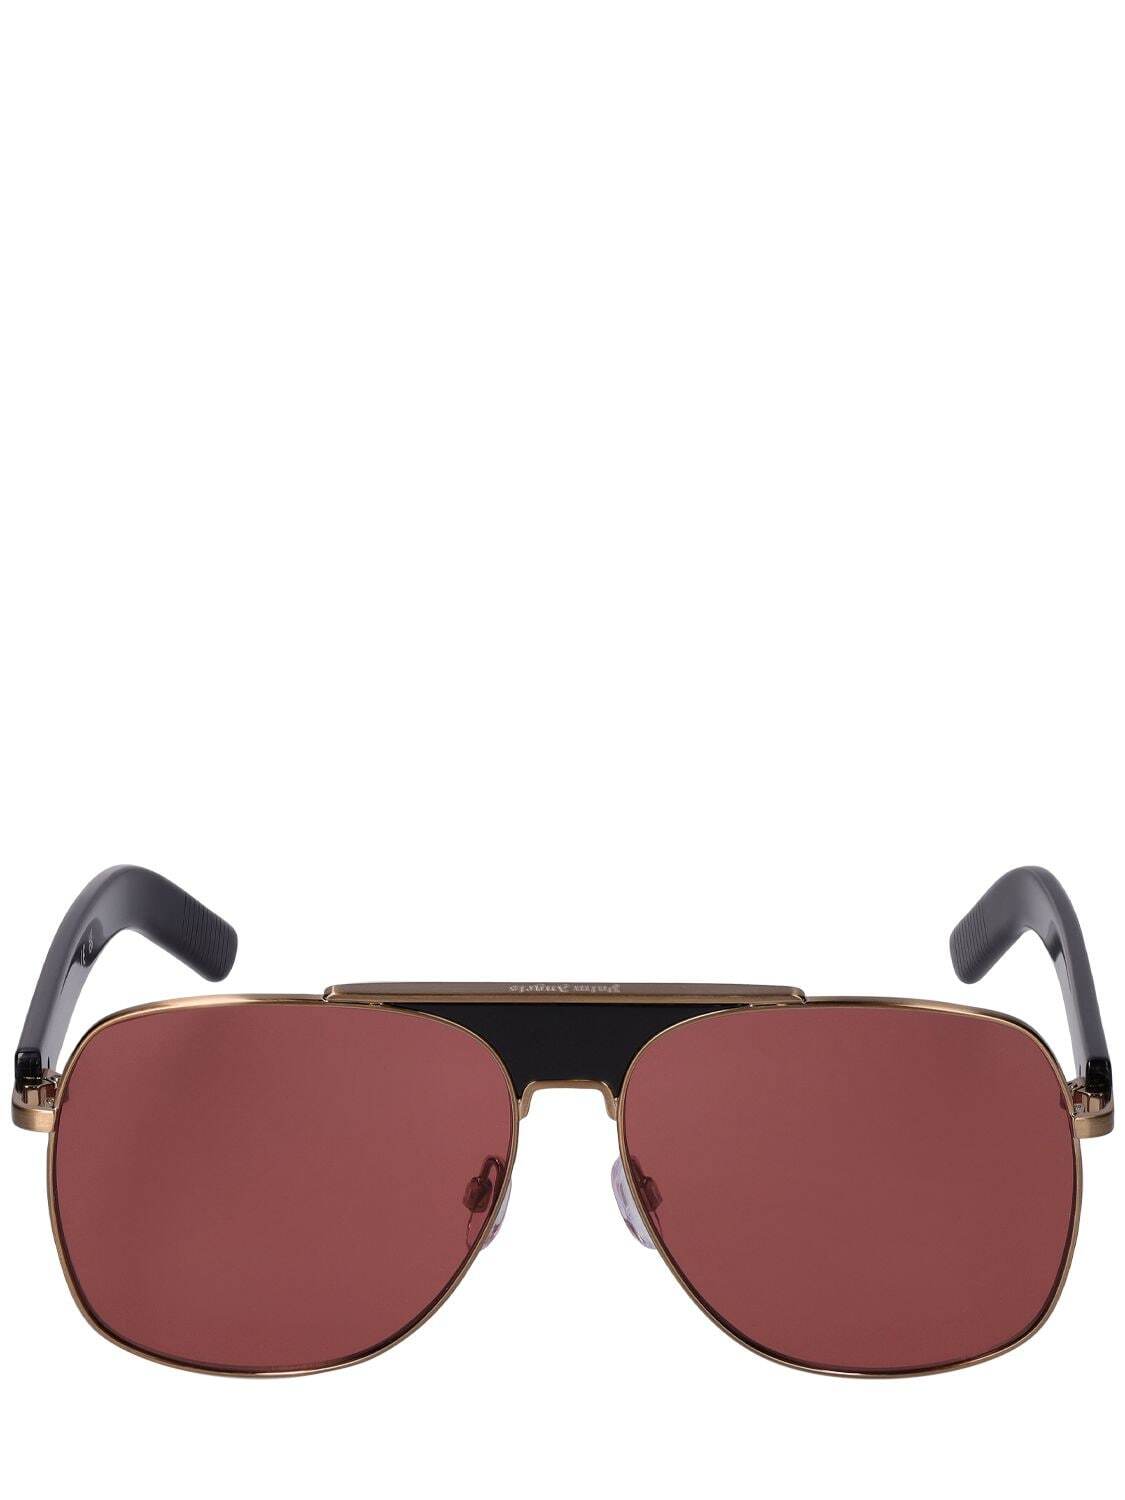 PALM ANGELS Bay Pilot Acetate & Metal Sunglasses in gold / burgundy